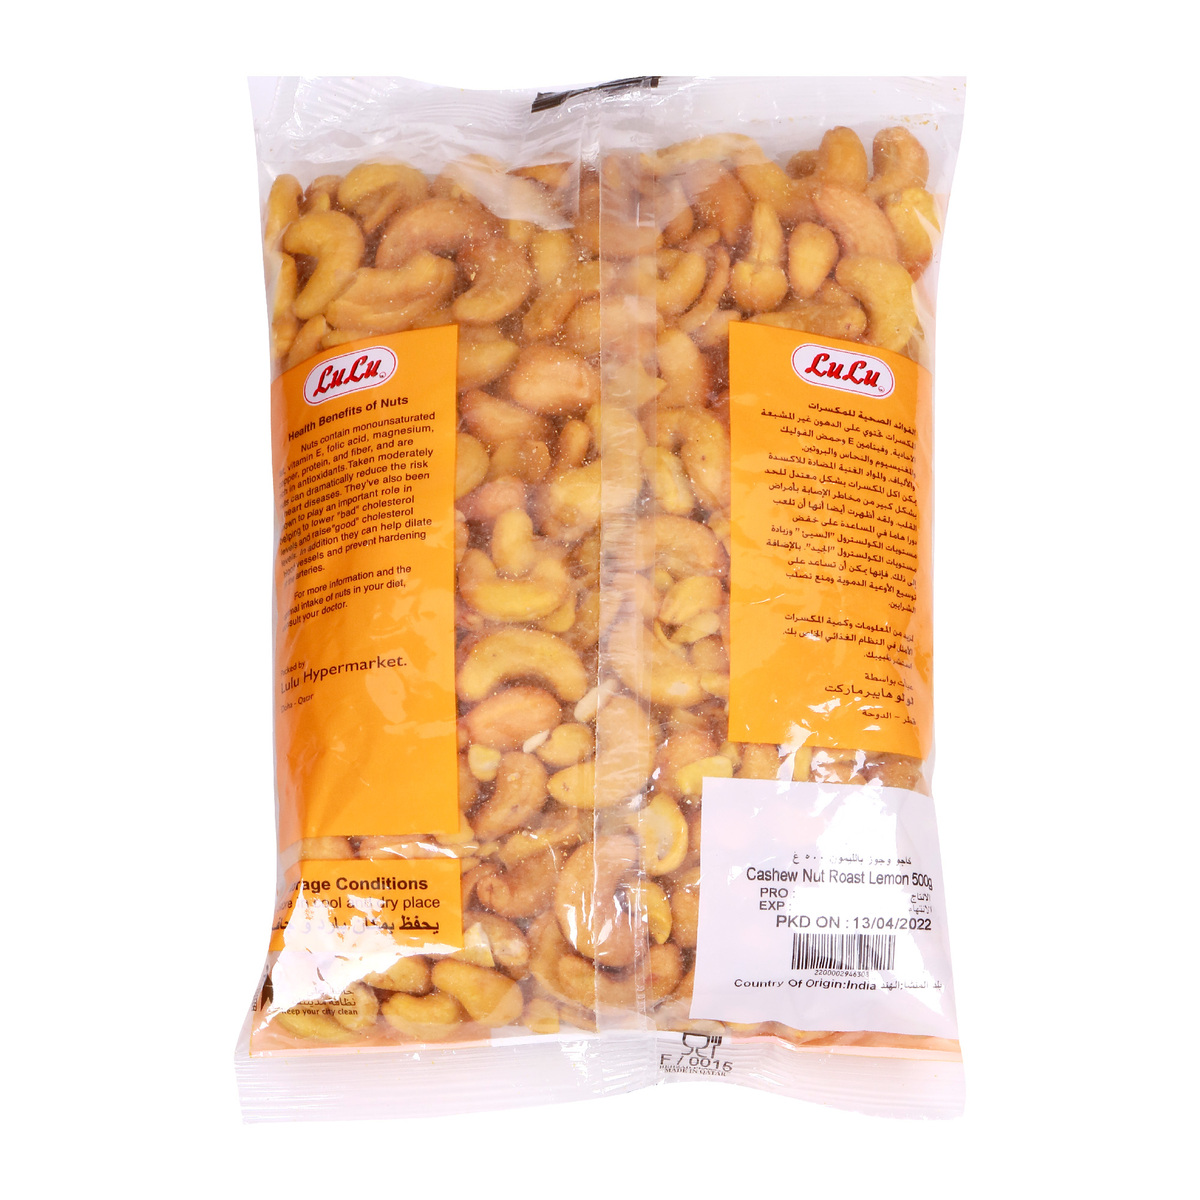 Lulu Cashew Nut Roast Lemon 500g Online At Best Price Roastery Nuts Lulu Qatar 